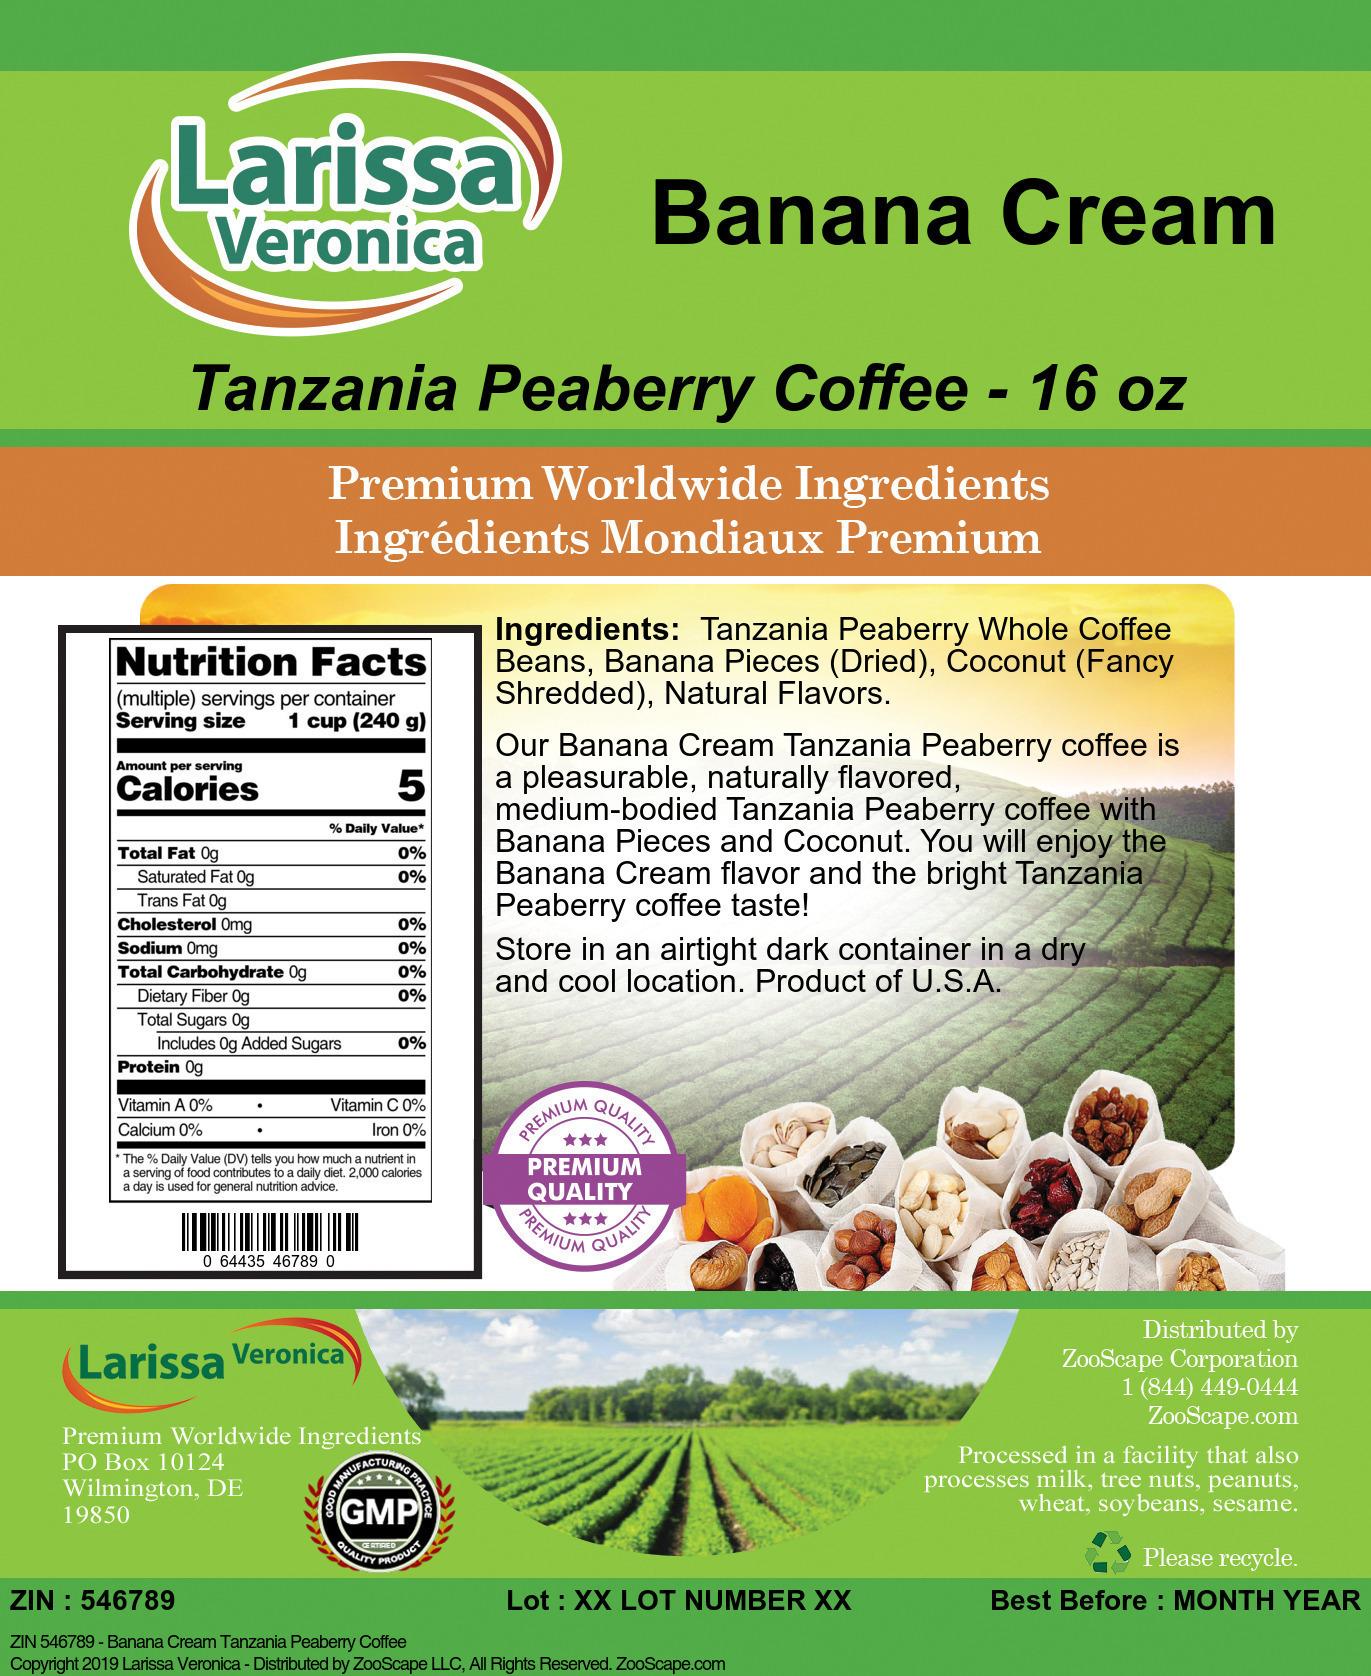 Banana Cream Tanzania Peaberry Coffee - Label